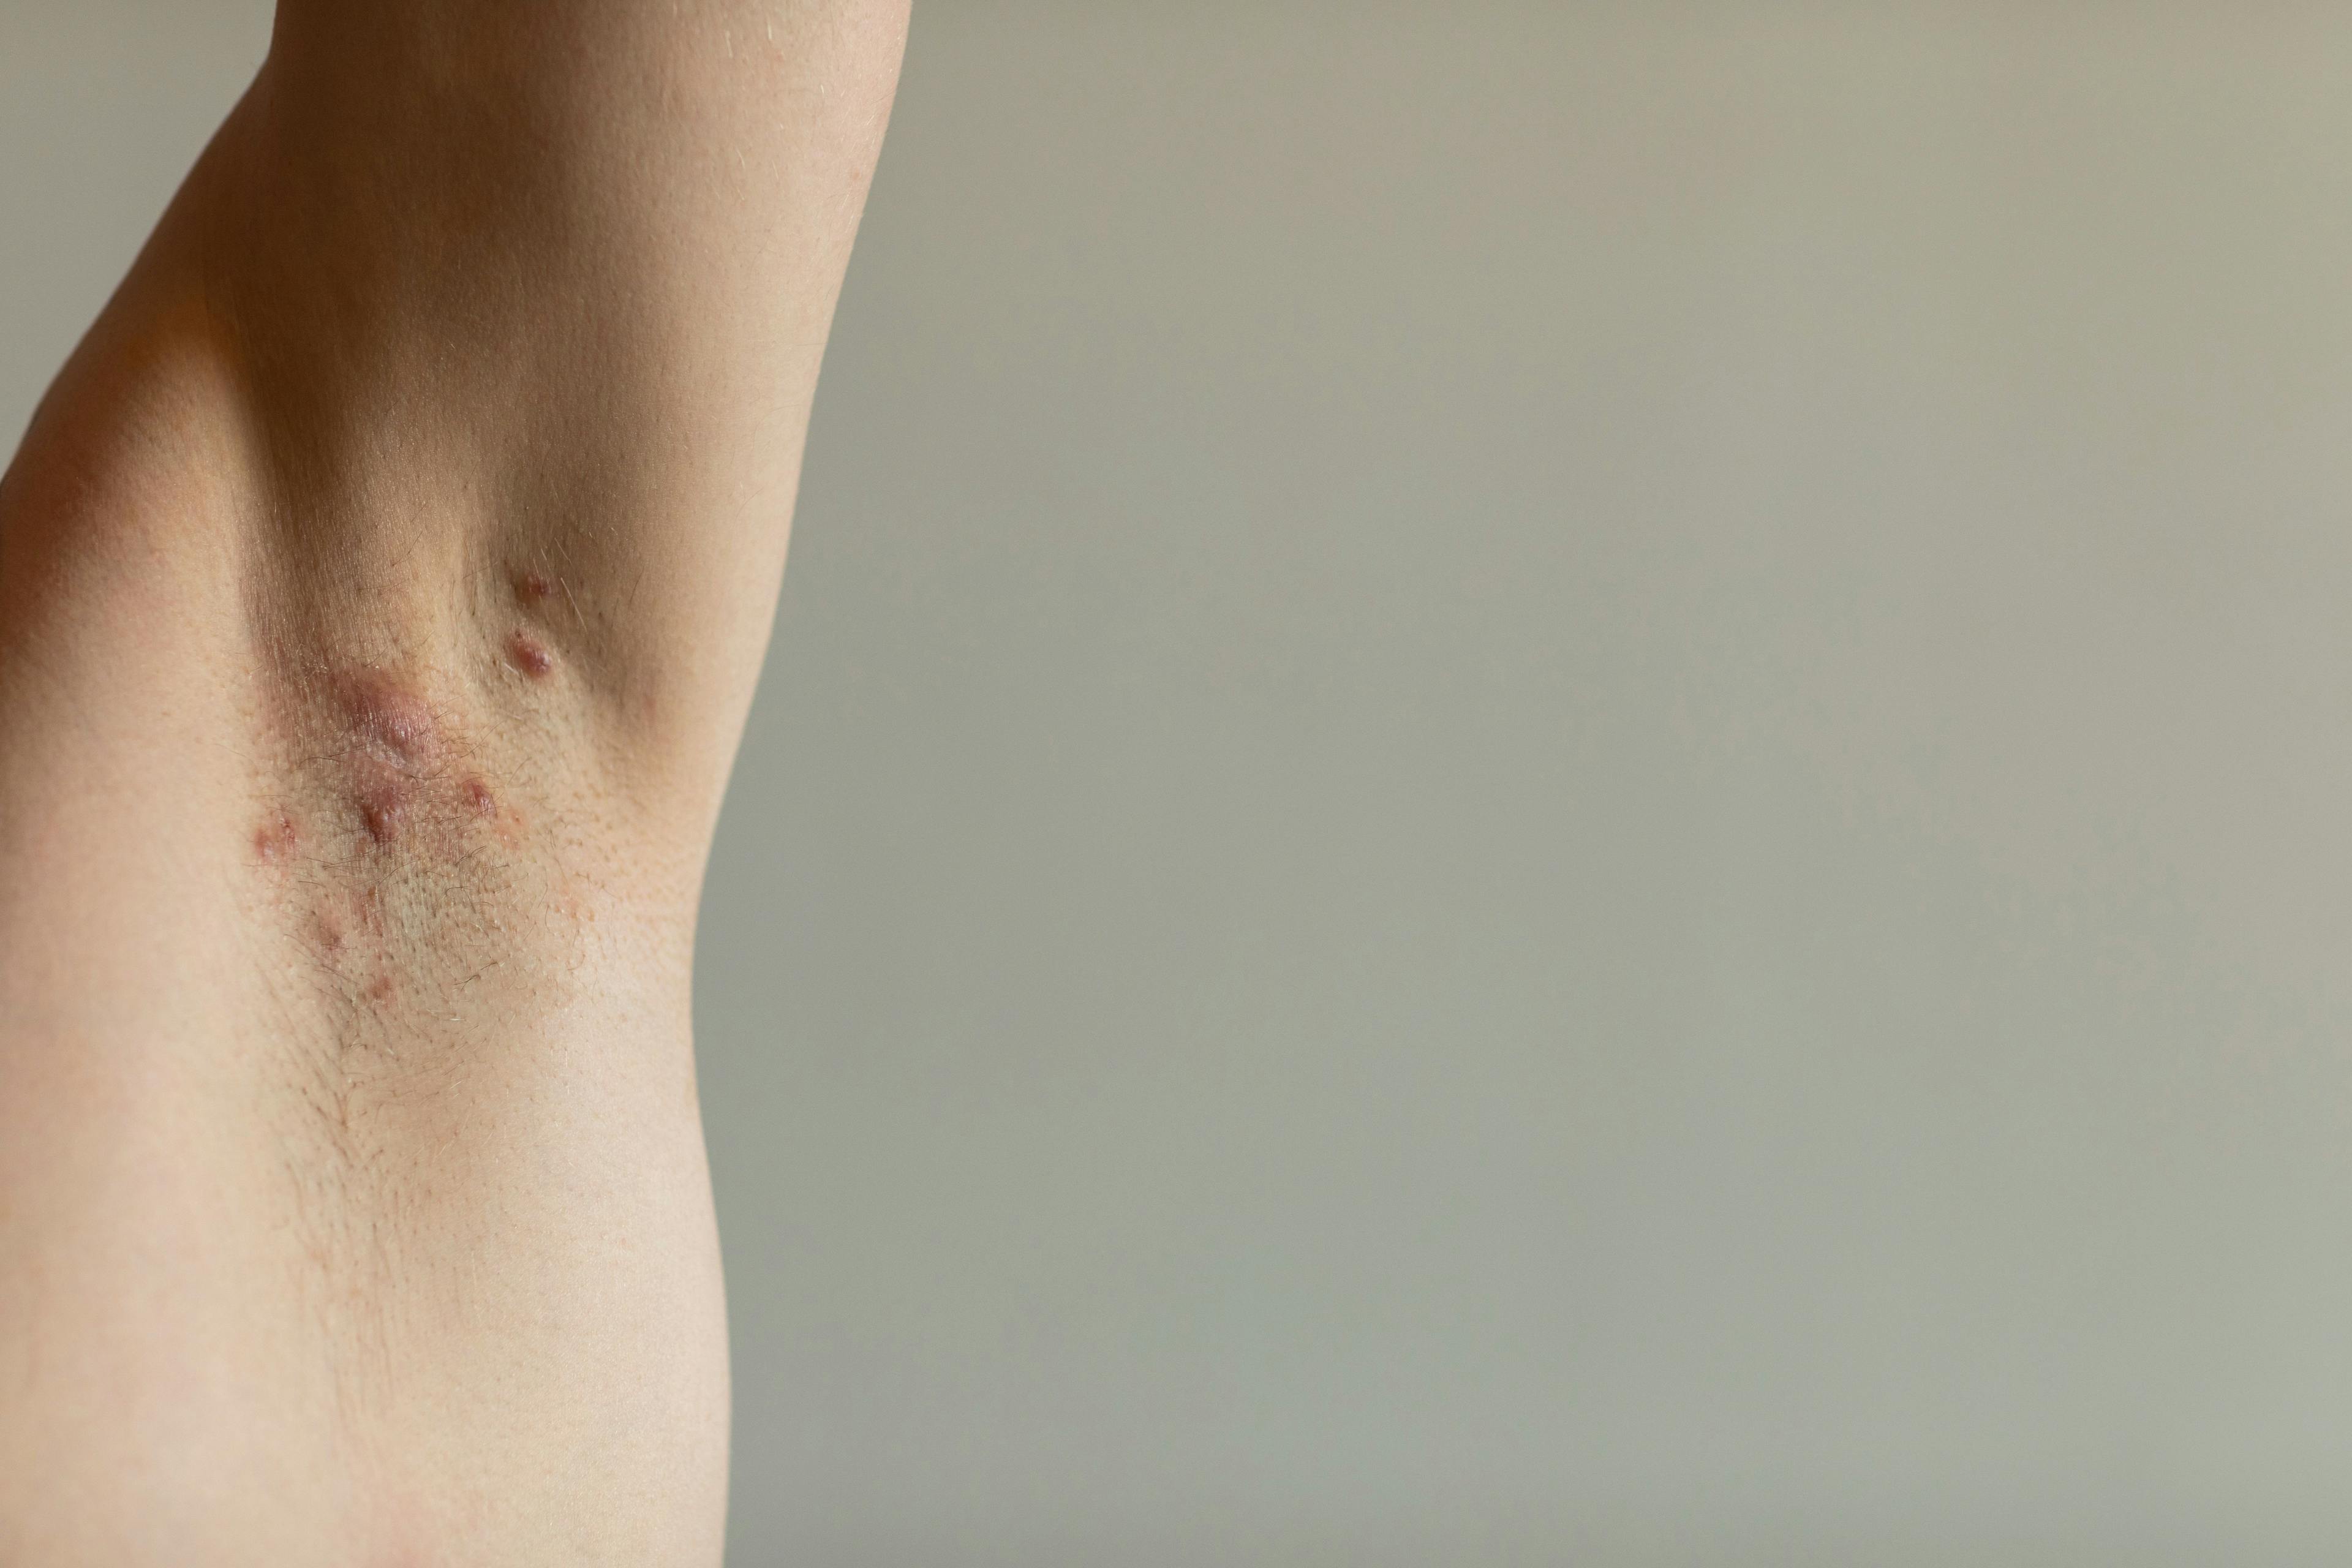 Woman with hidradenitis suppurativa under arm | Image credit: Lea - stock.adobe.com